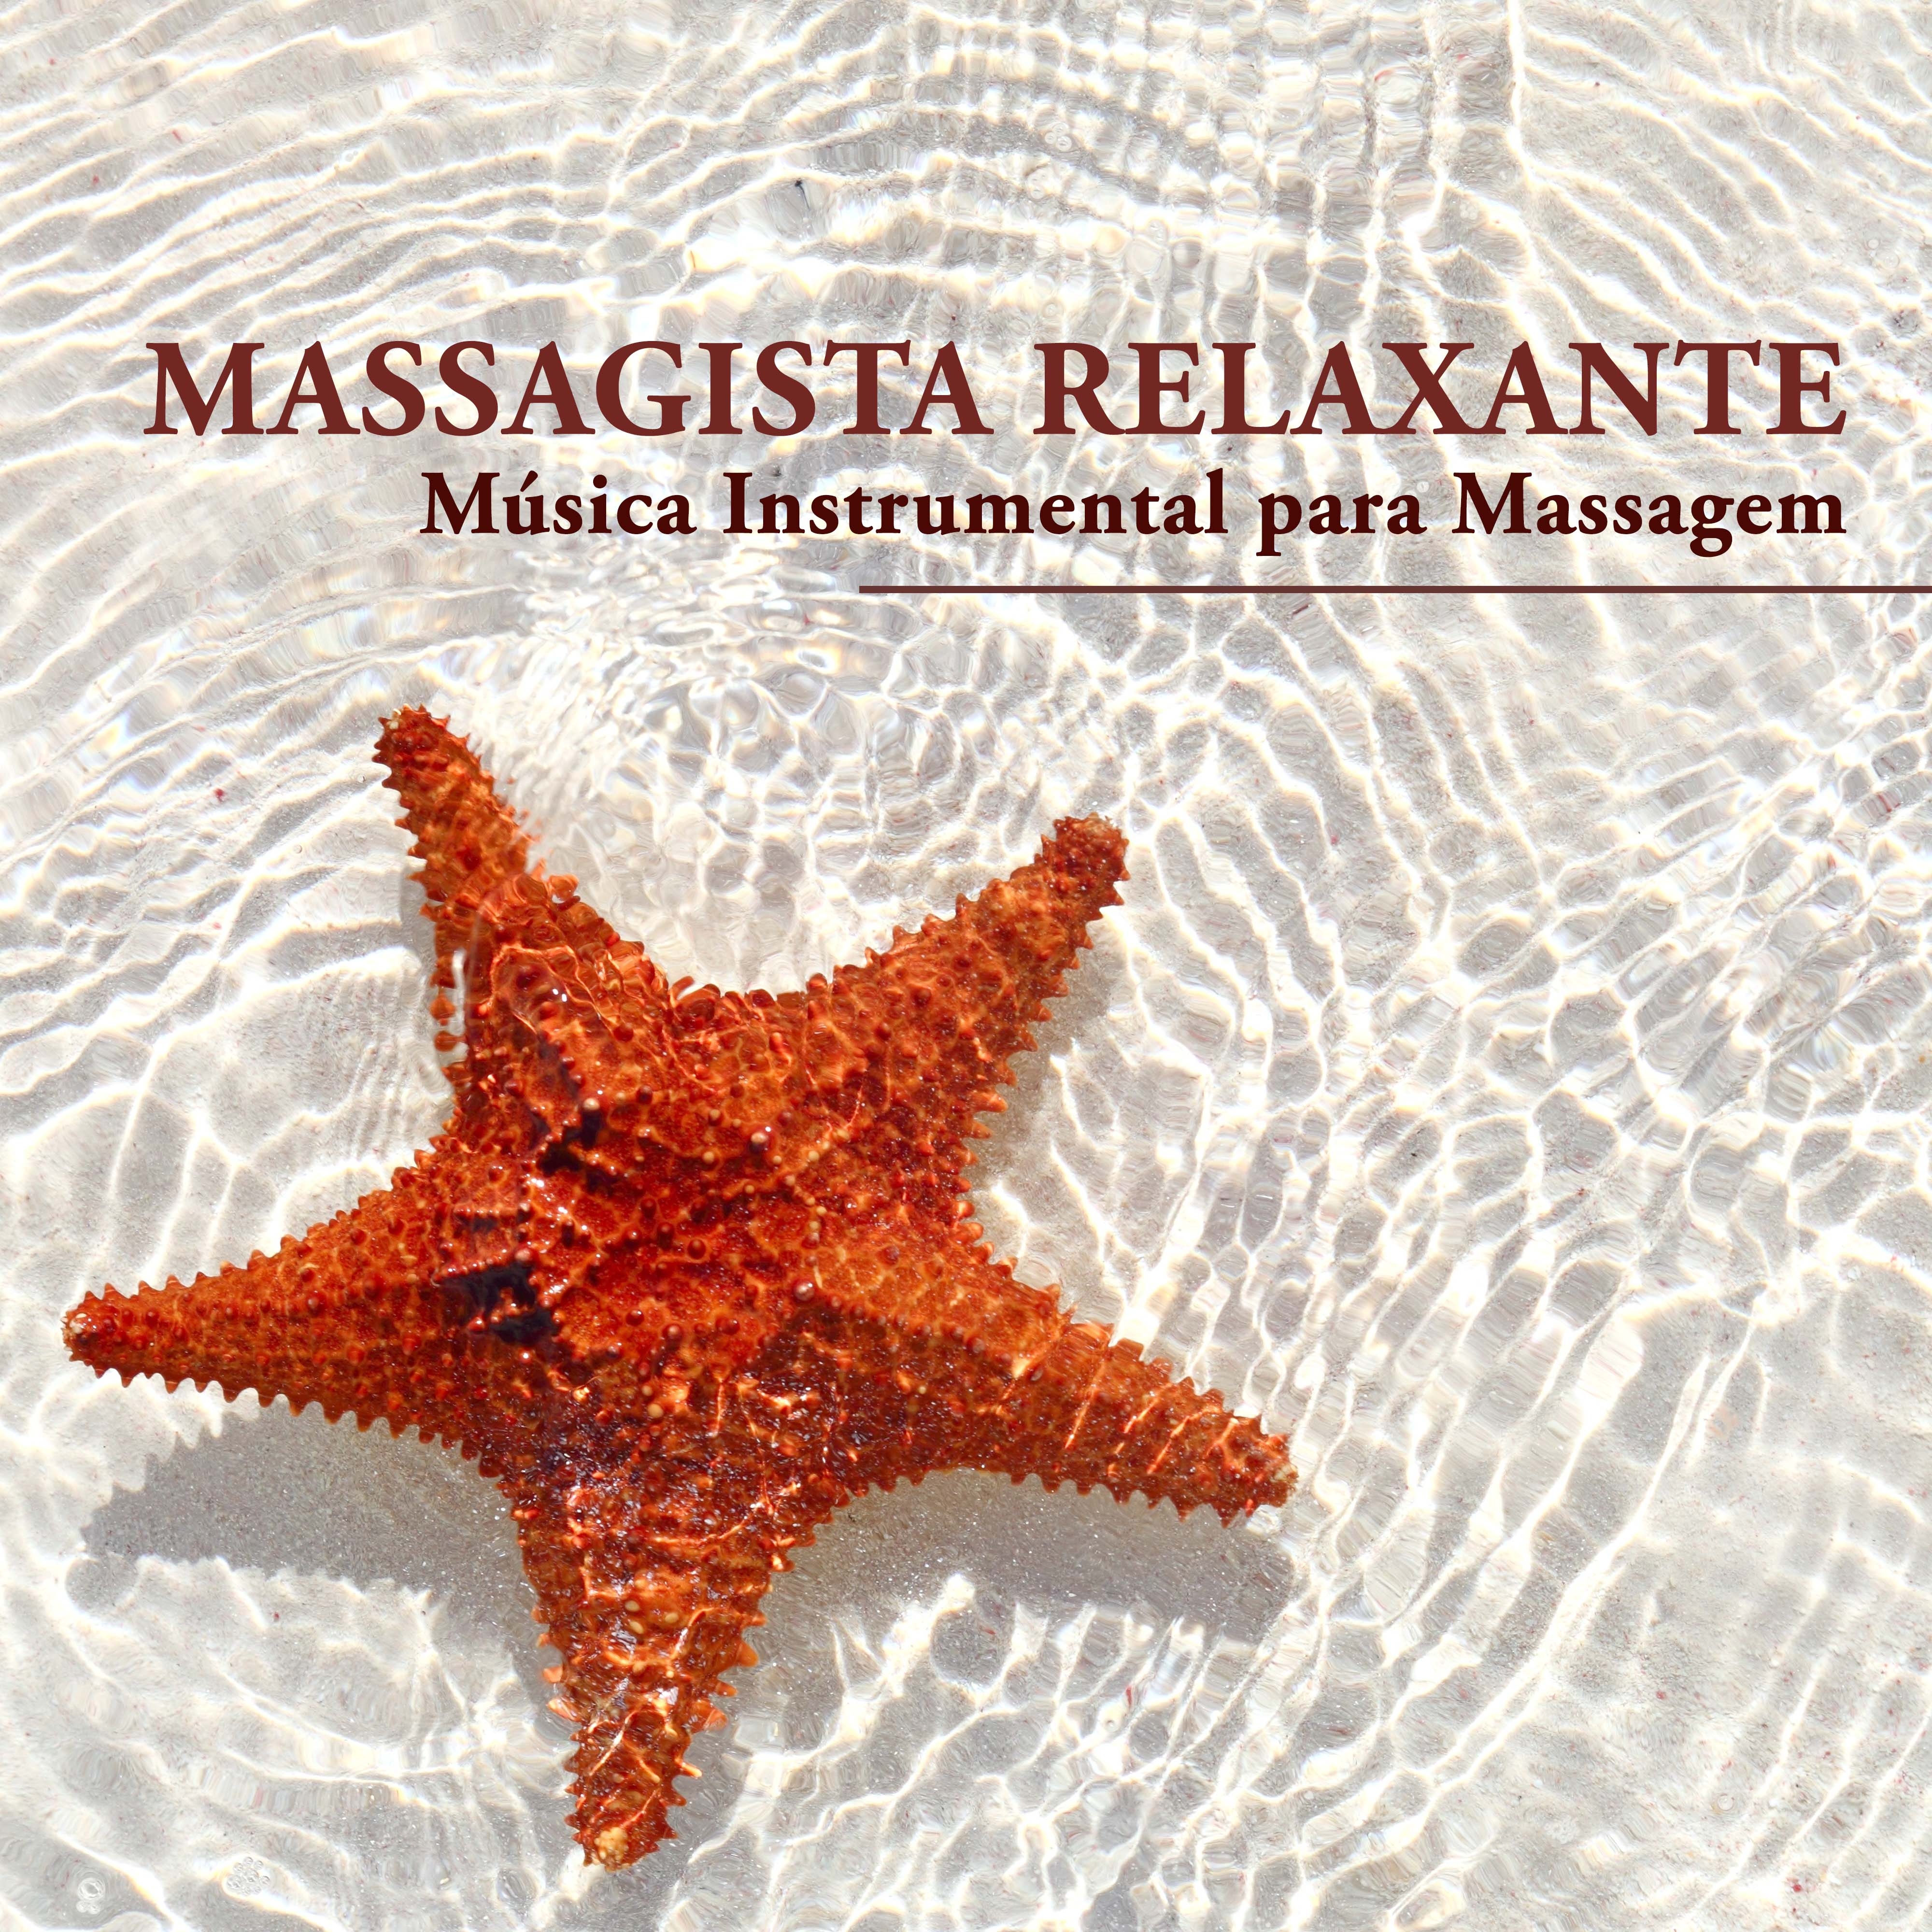 Massagista Relaxante  Mu sica Instrumental para Massagem, Massoterapia e Ayurveda